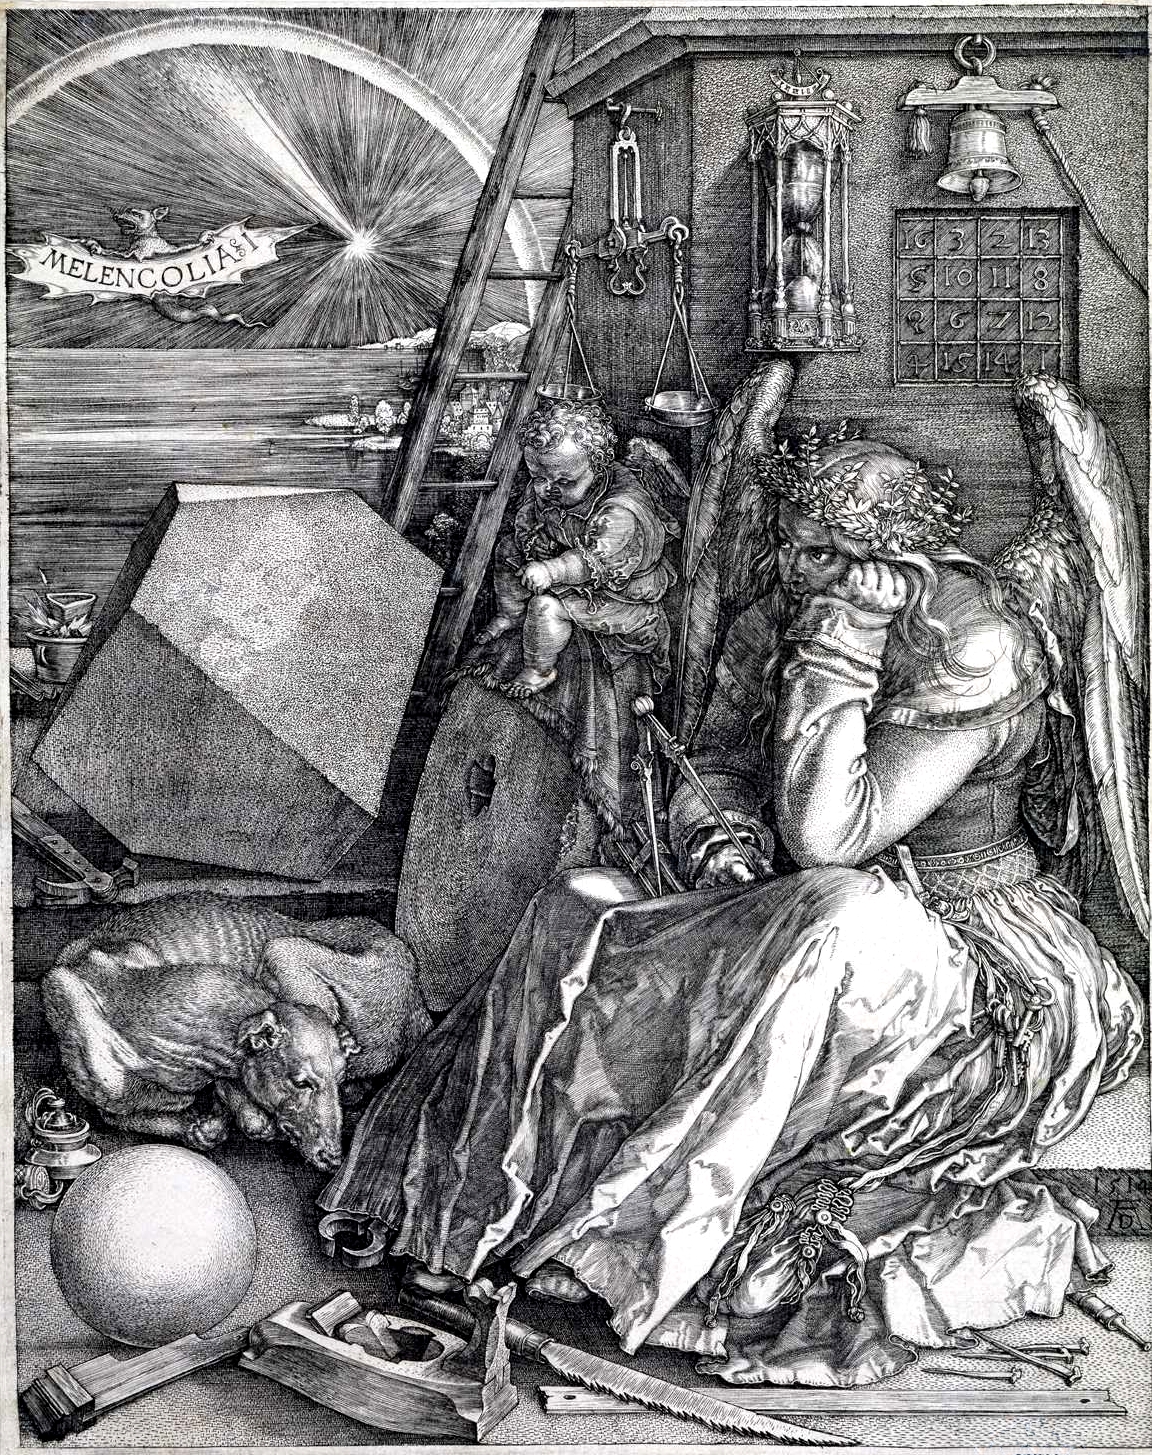 Albrecht Dürer, Melencolia, 1514